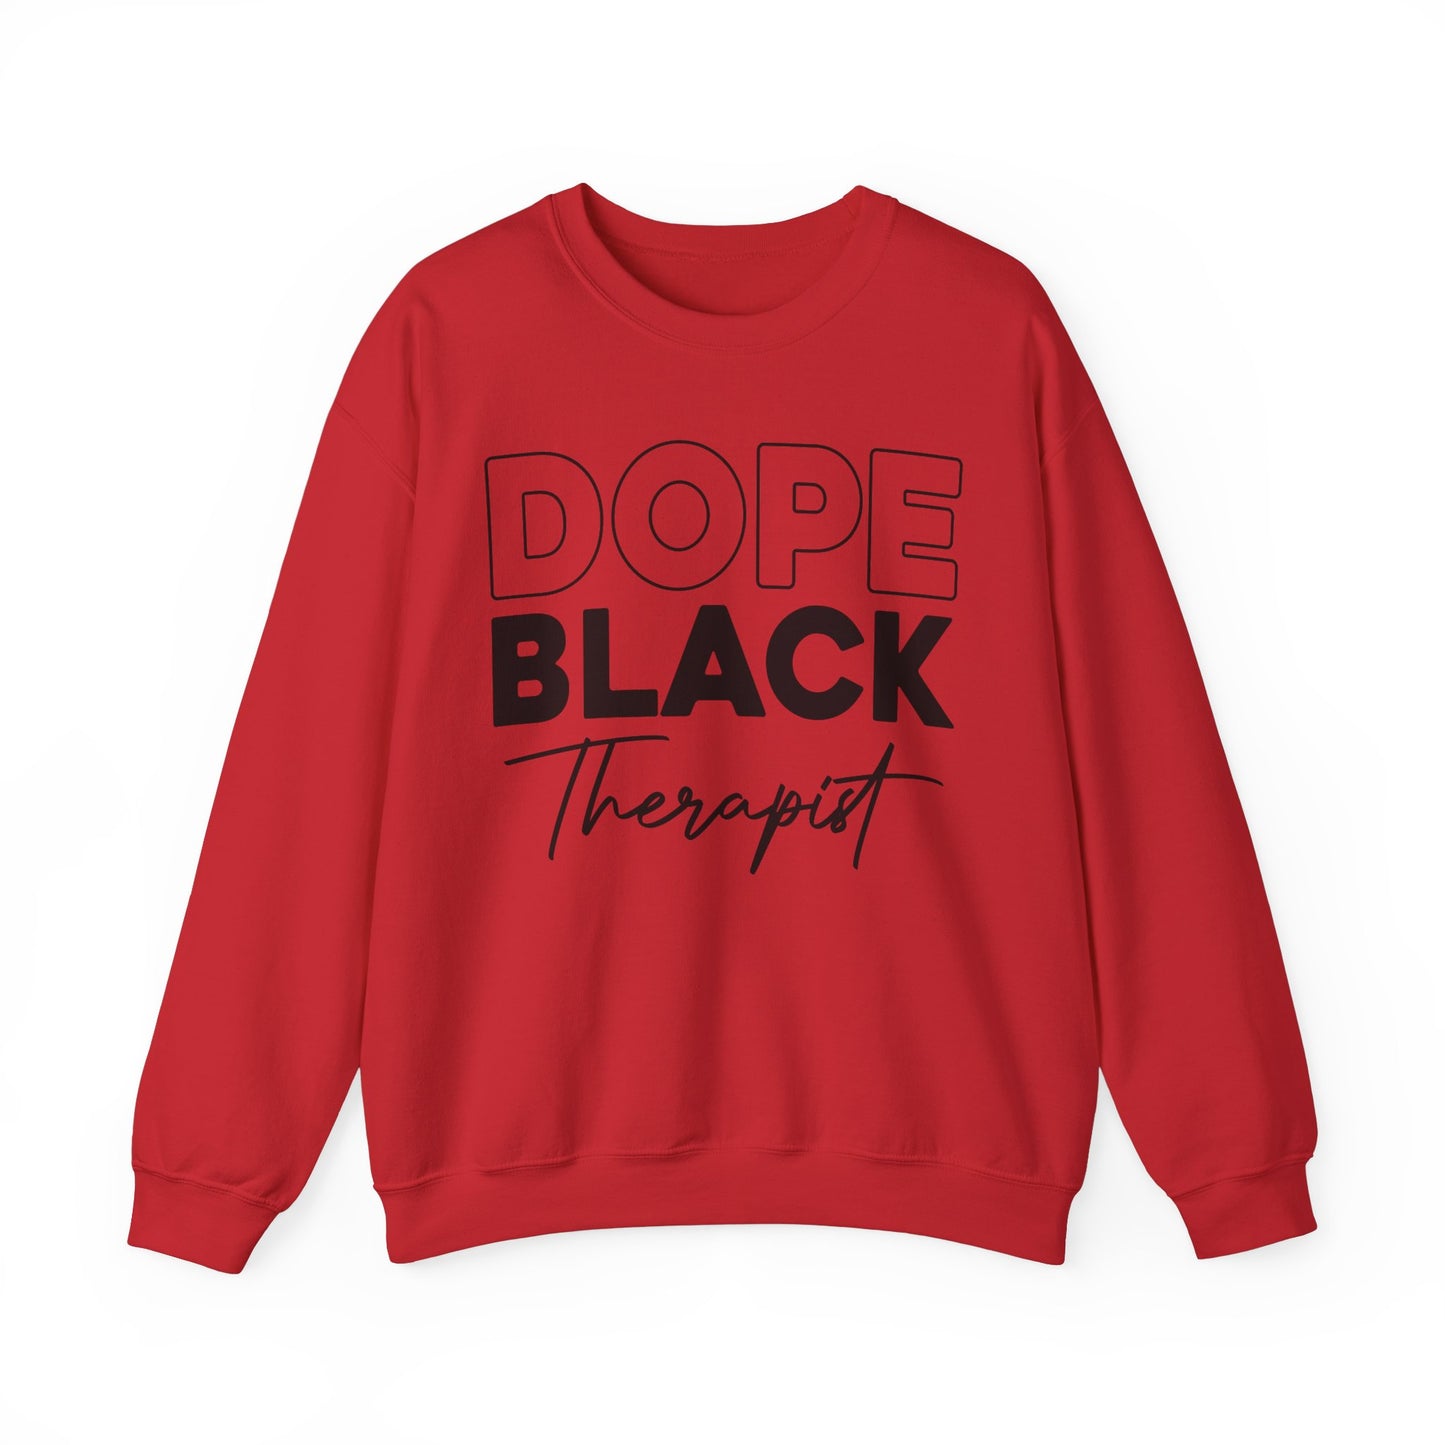 Dope Black Therapist Unisex Sweatshirt